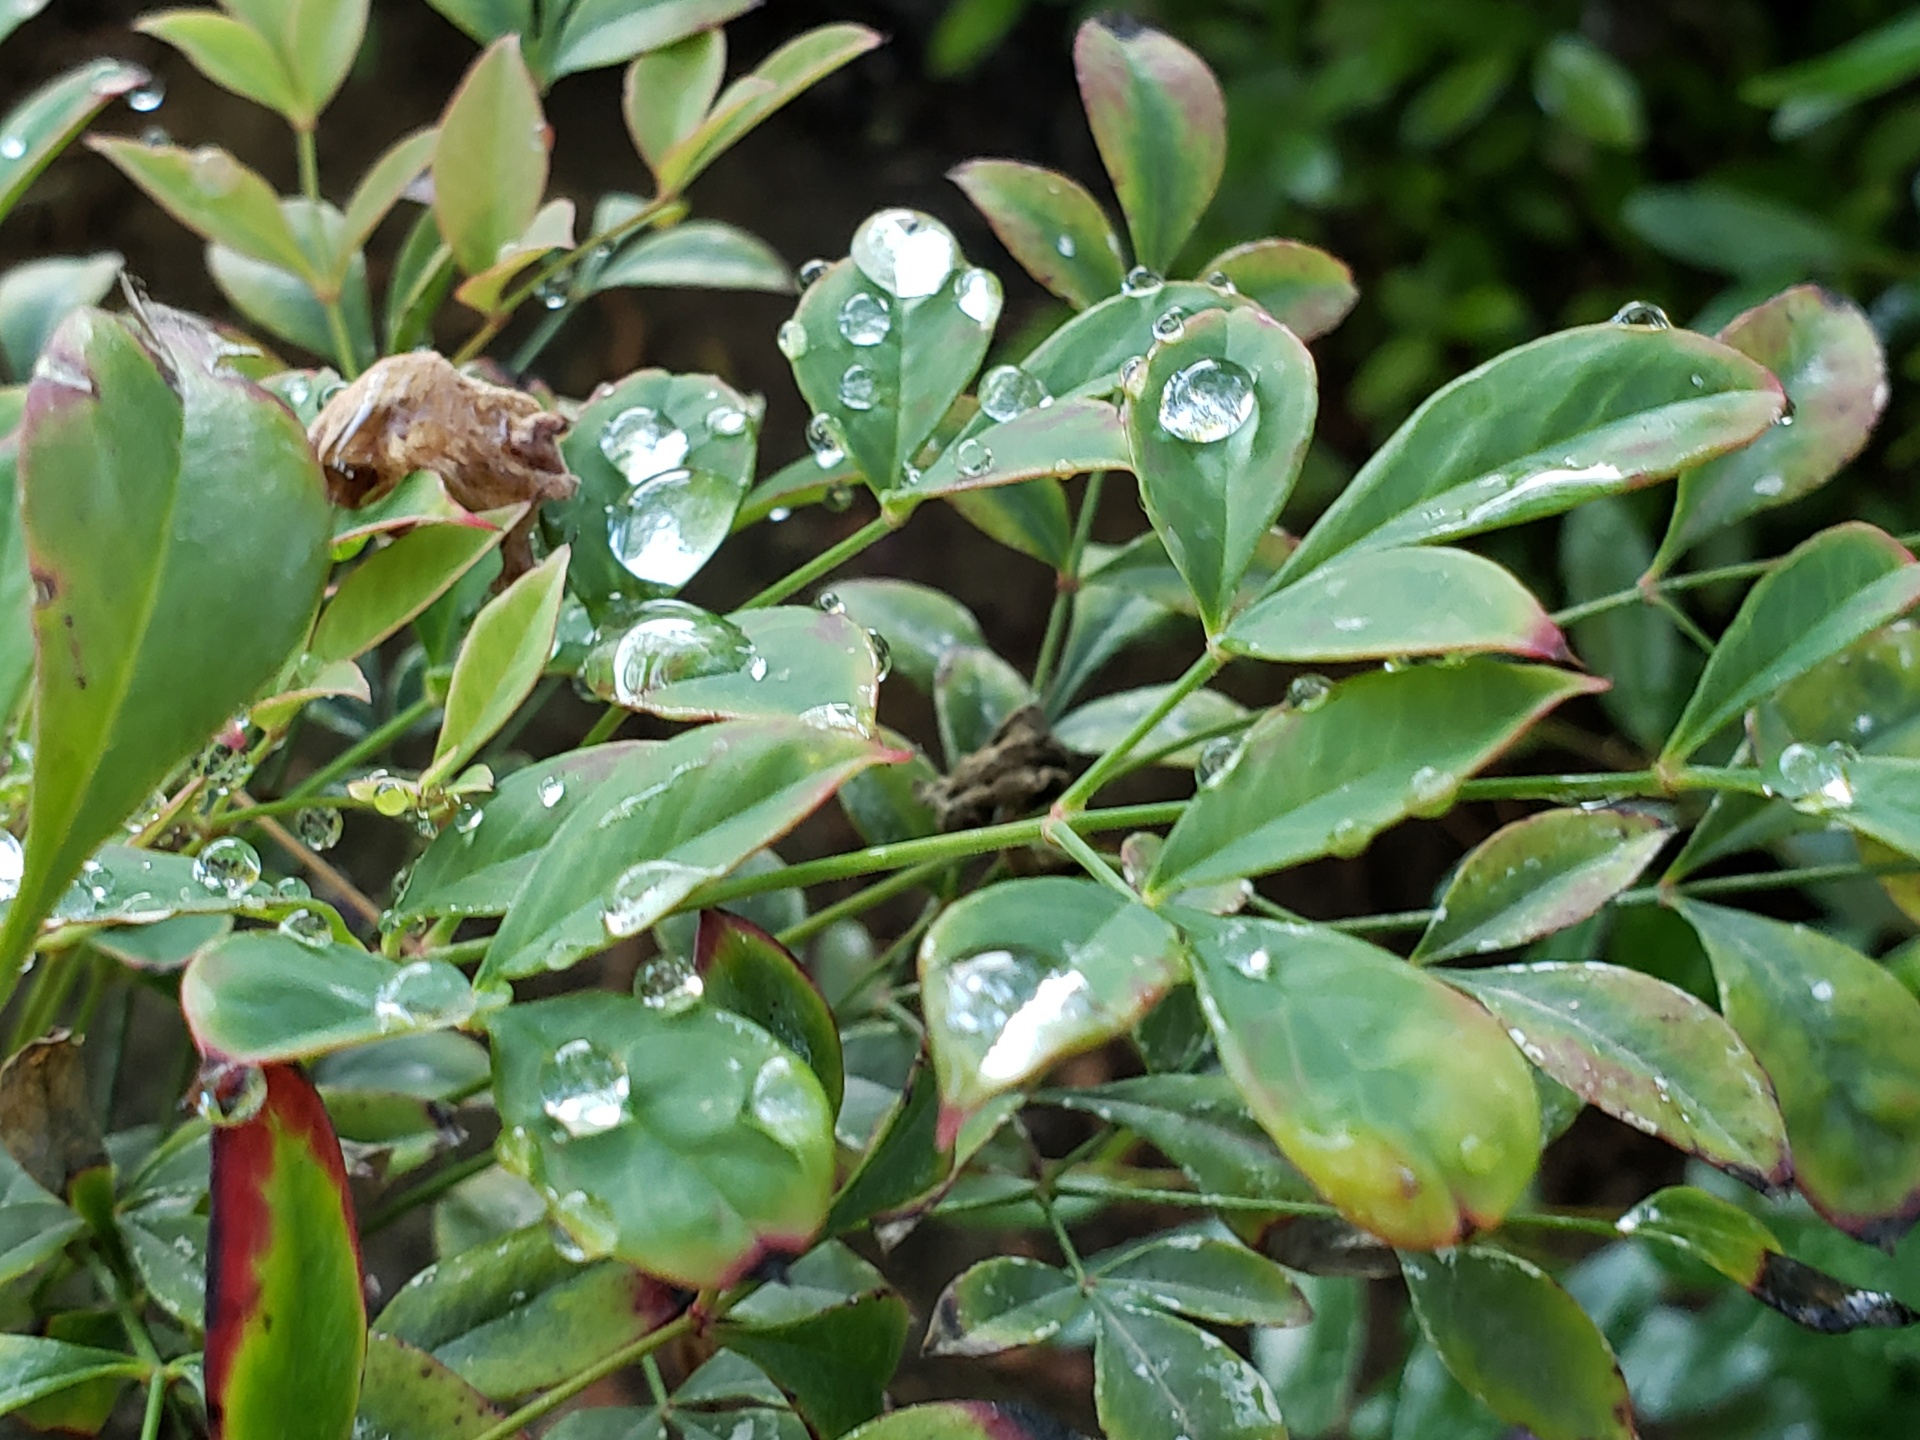 Matt green leaf with water droplets